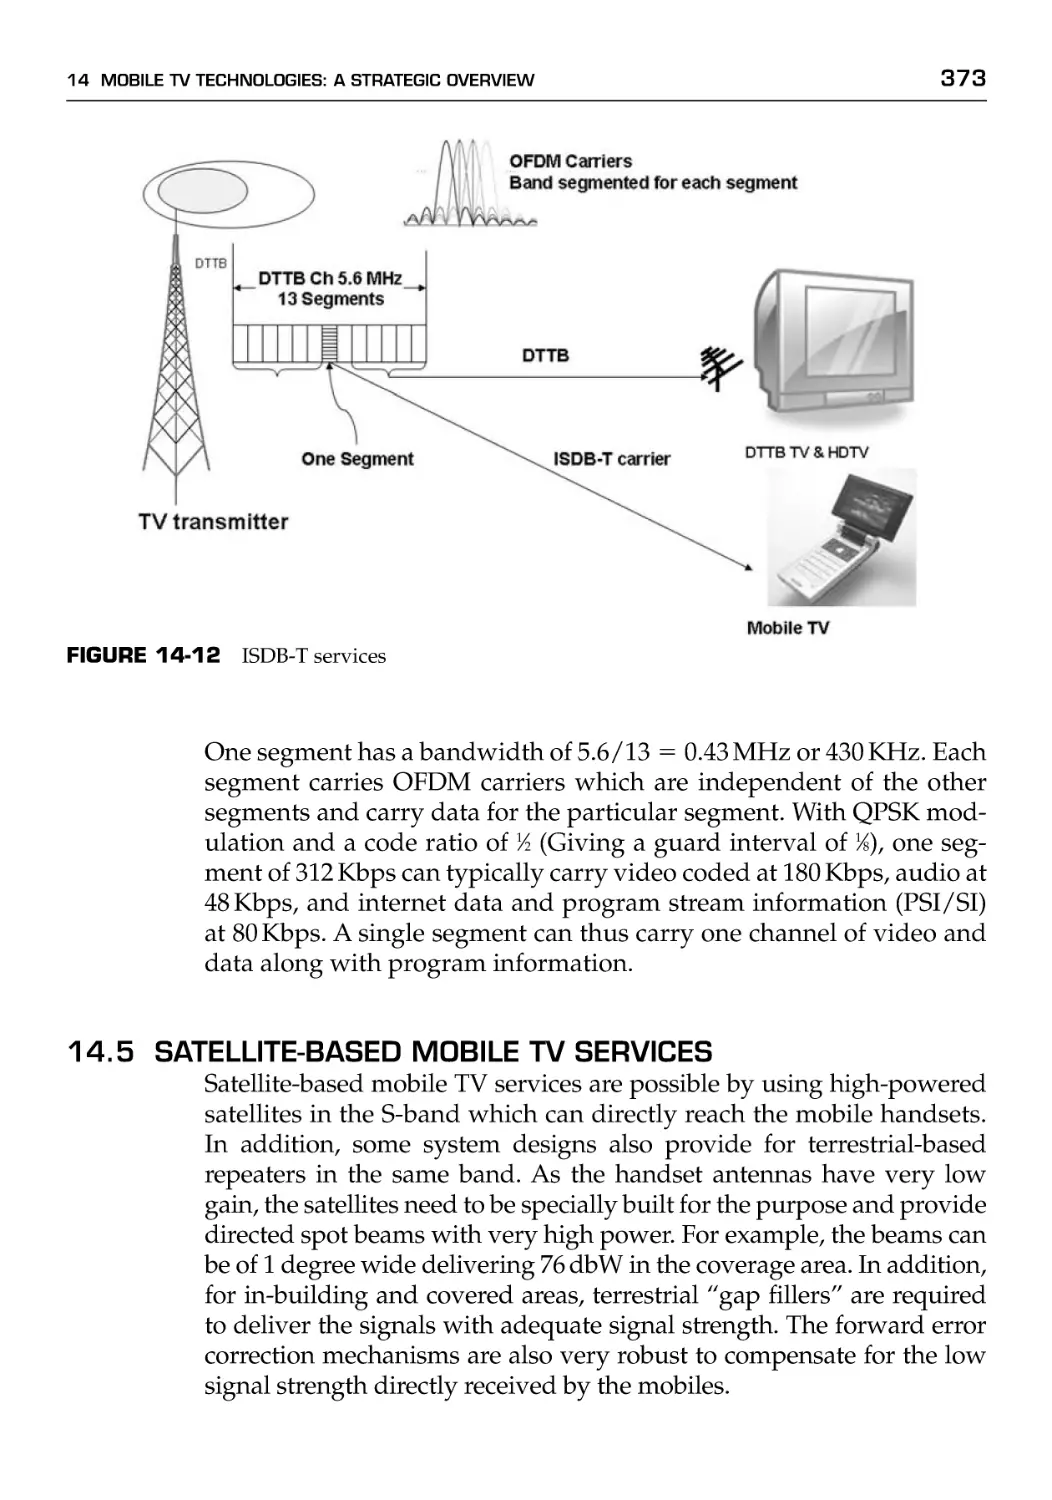 14.5 Satellite-based Mobile TV Services